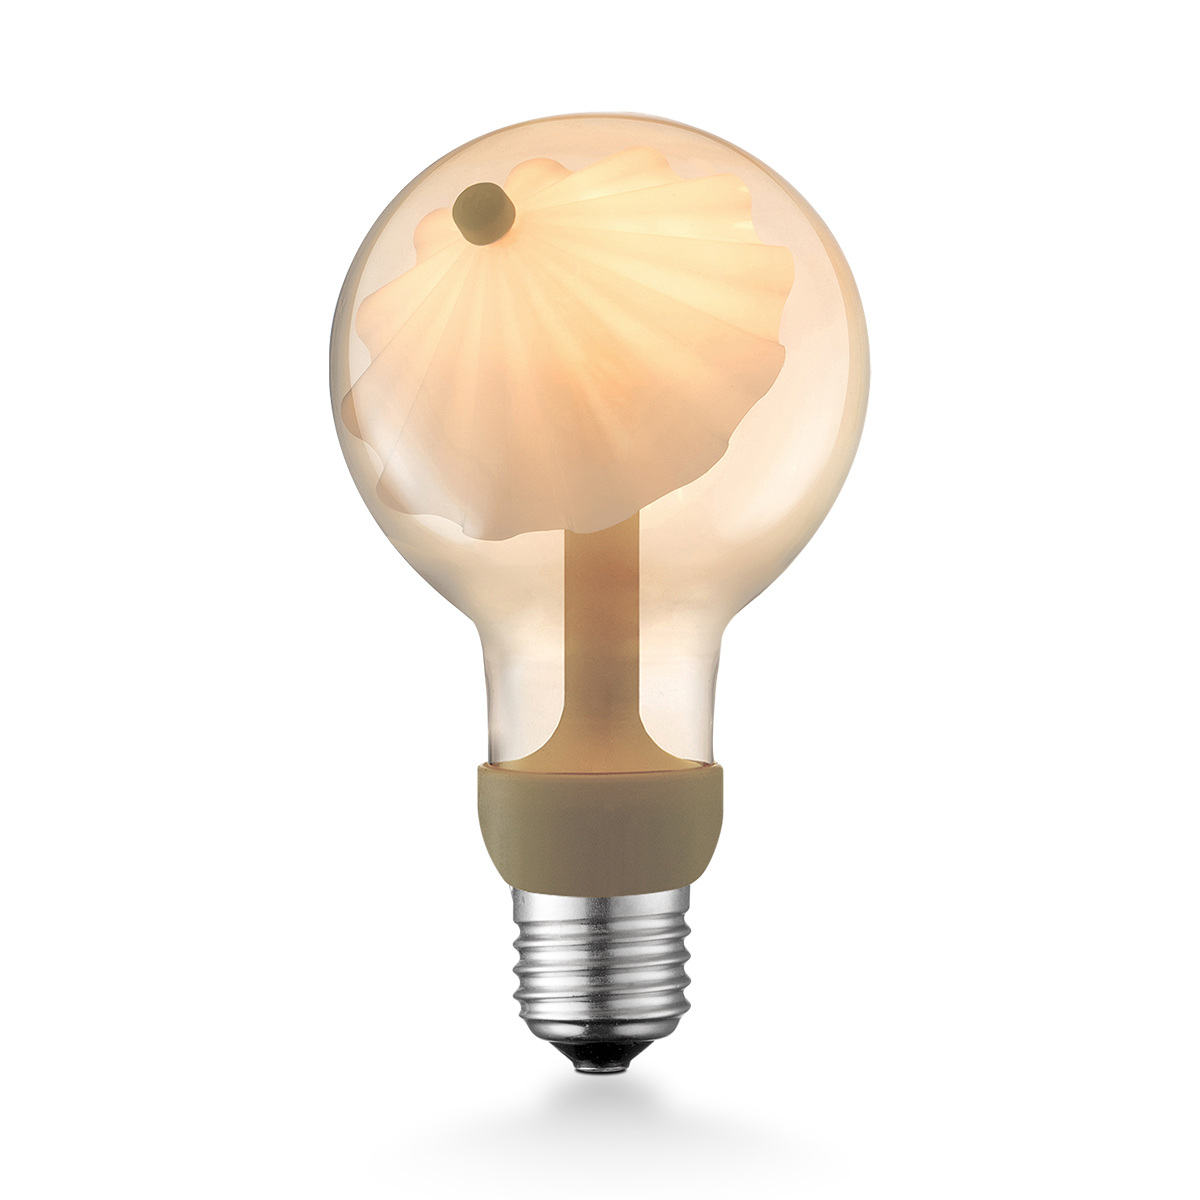 Tangla lighting - 0673-01-N - LED Light Bulb Move me - G80 3W Shell amber - and - white - E27 / E26